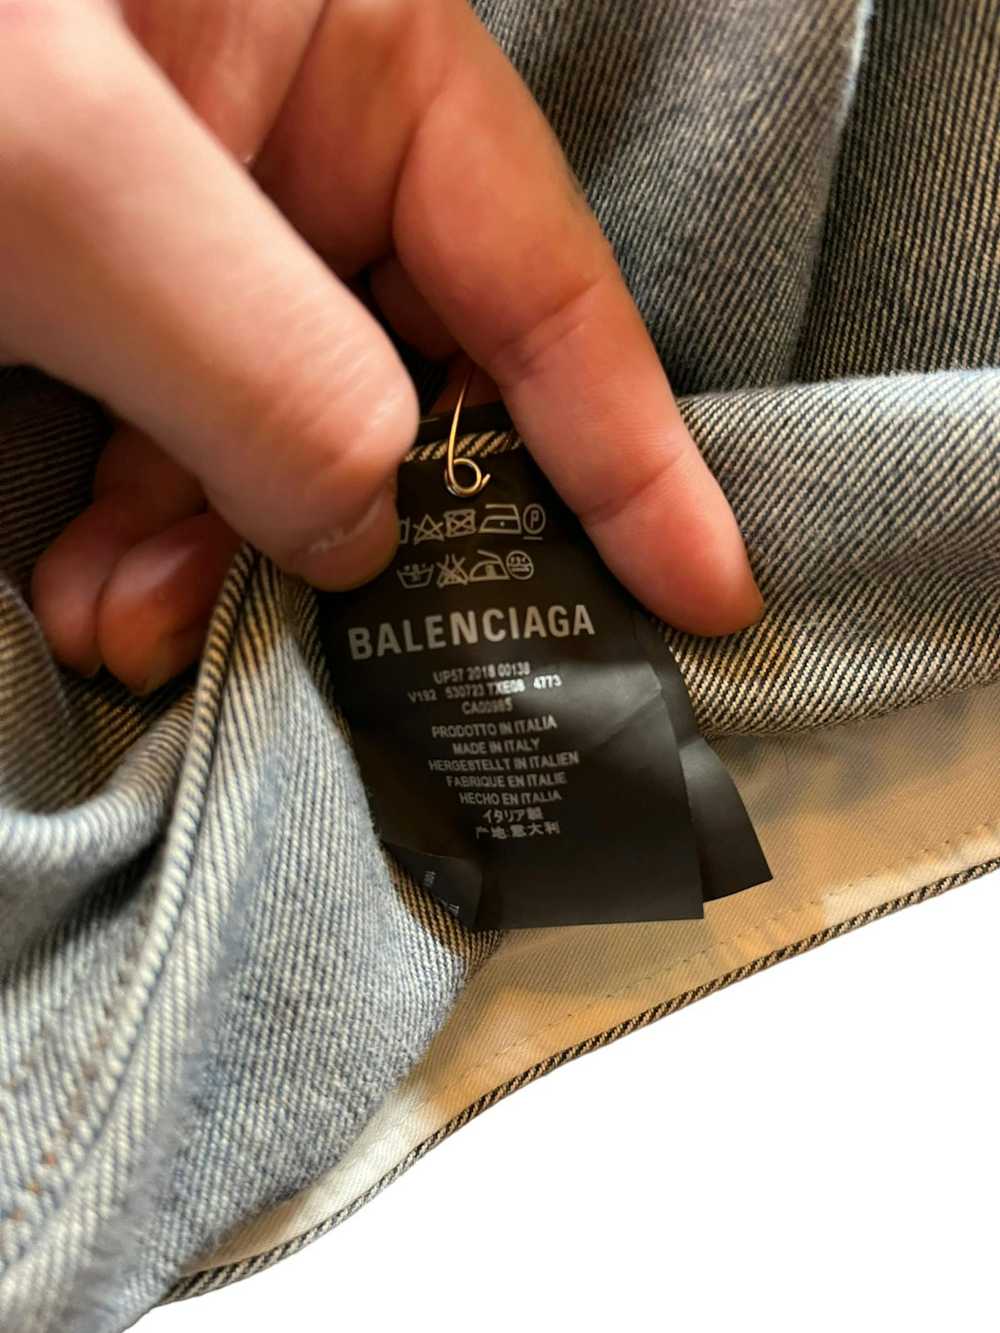 Balenciaga Balenciaga 2019 Graffti Denim Jacket - image 4